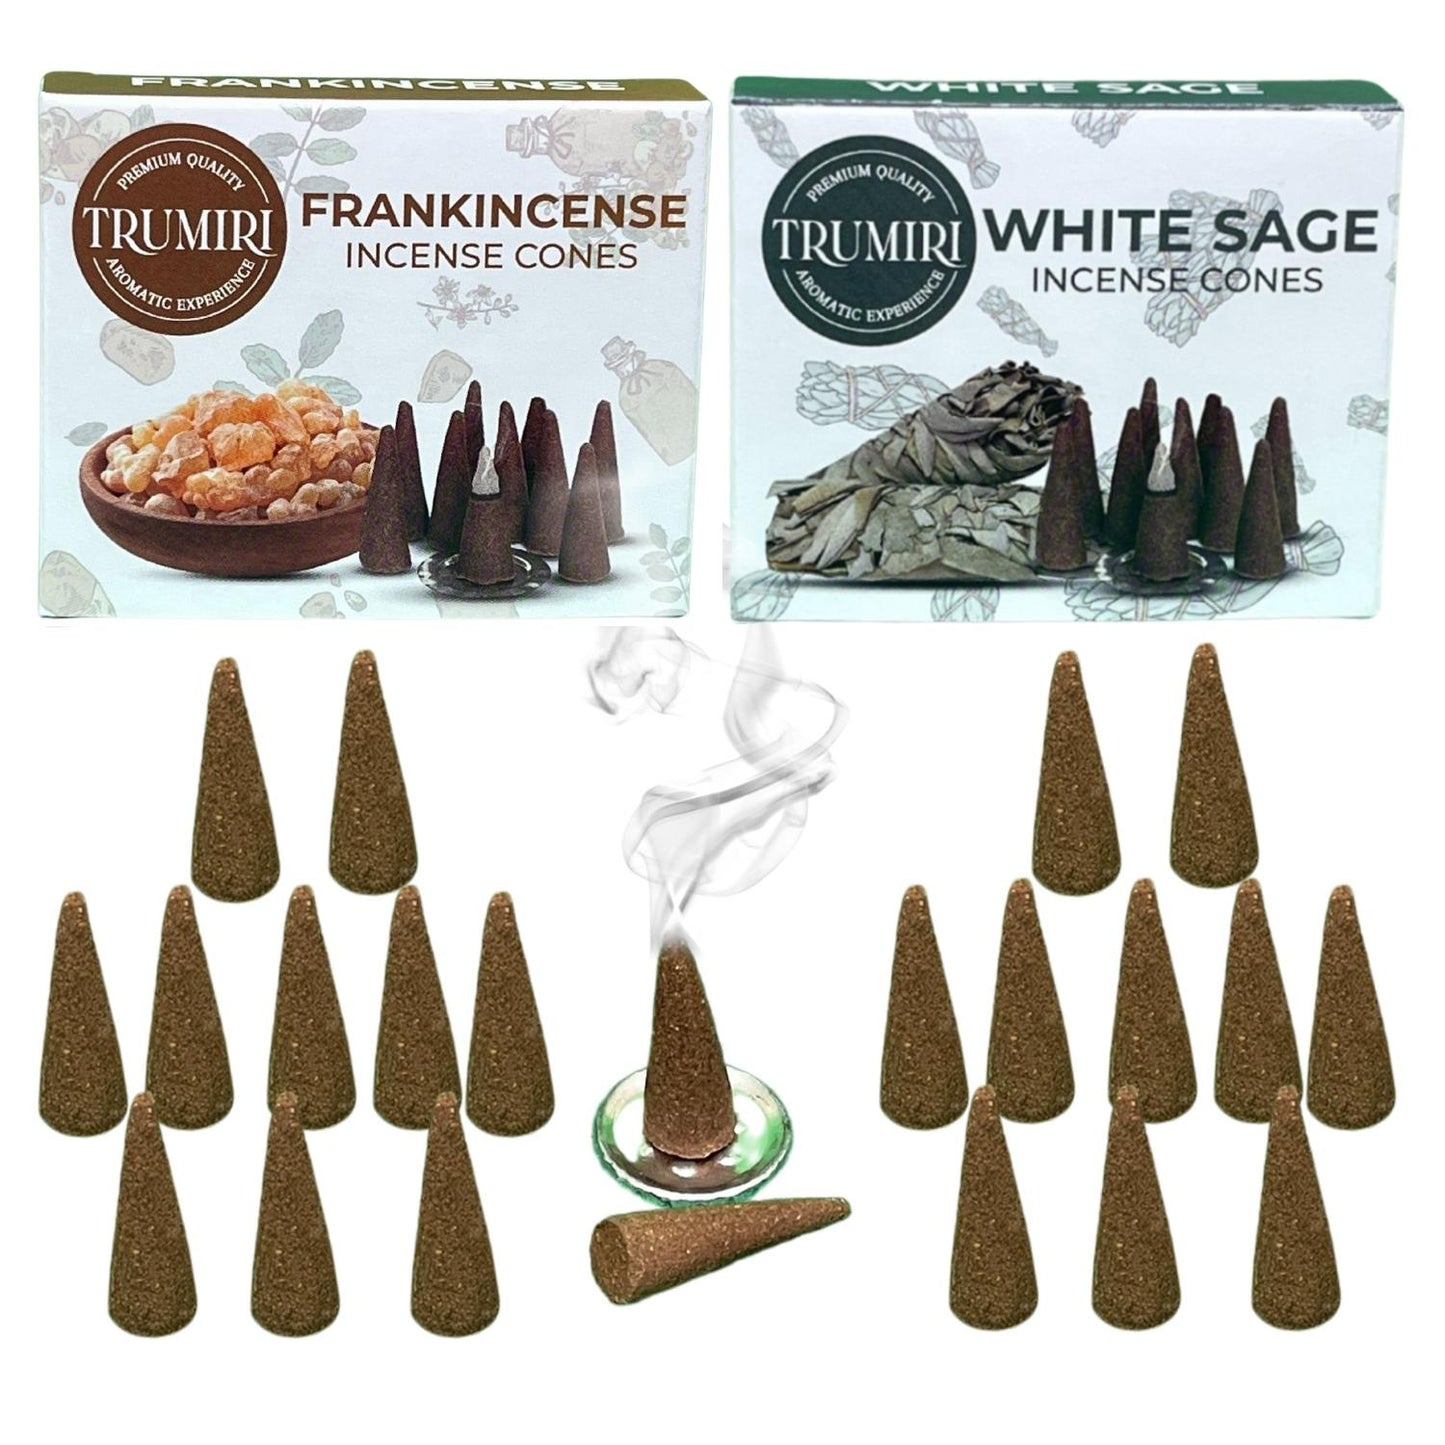 Trumiri Incense Cones Combo Packs - 2 Scents - 10 Cones per Scent - Total 20 Incense Cones